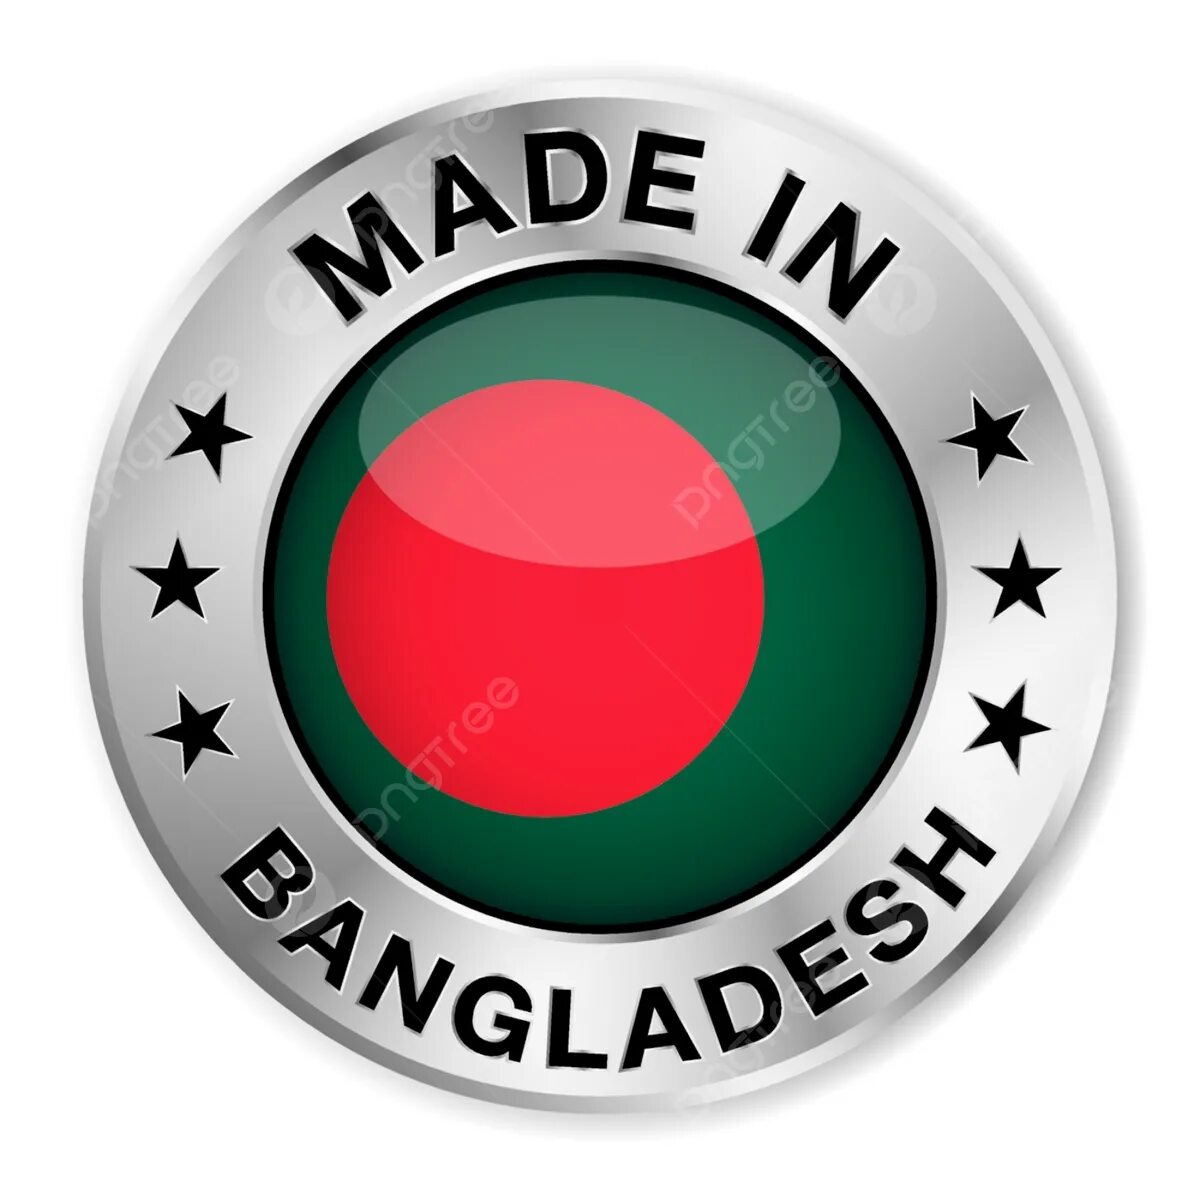 Made in bangladesh